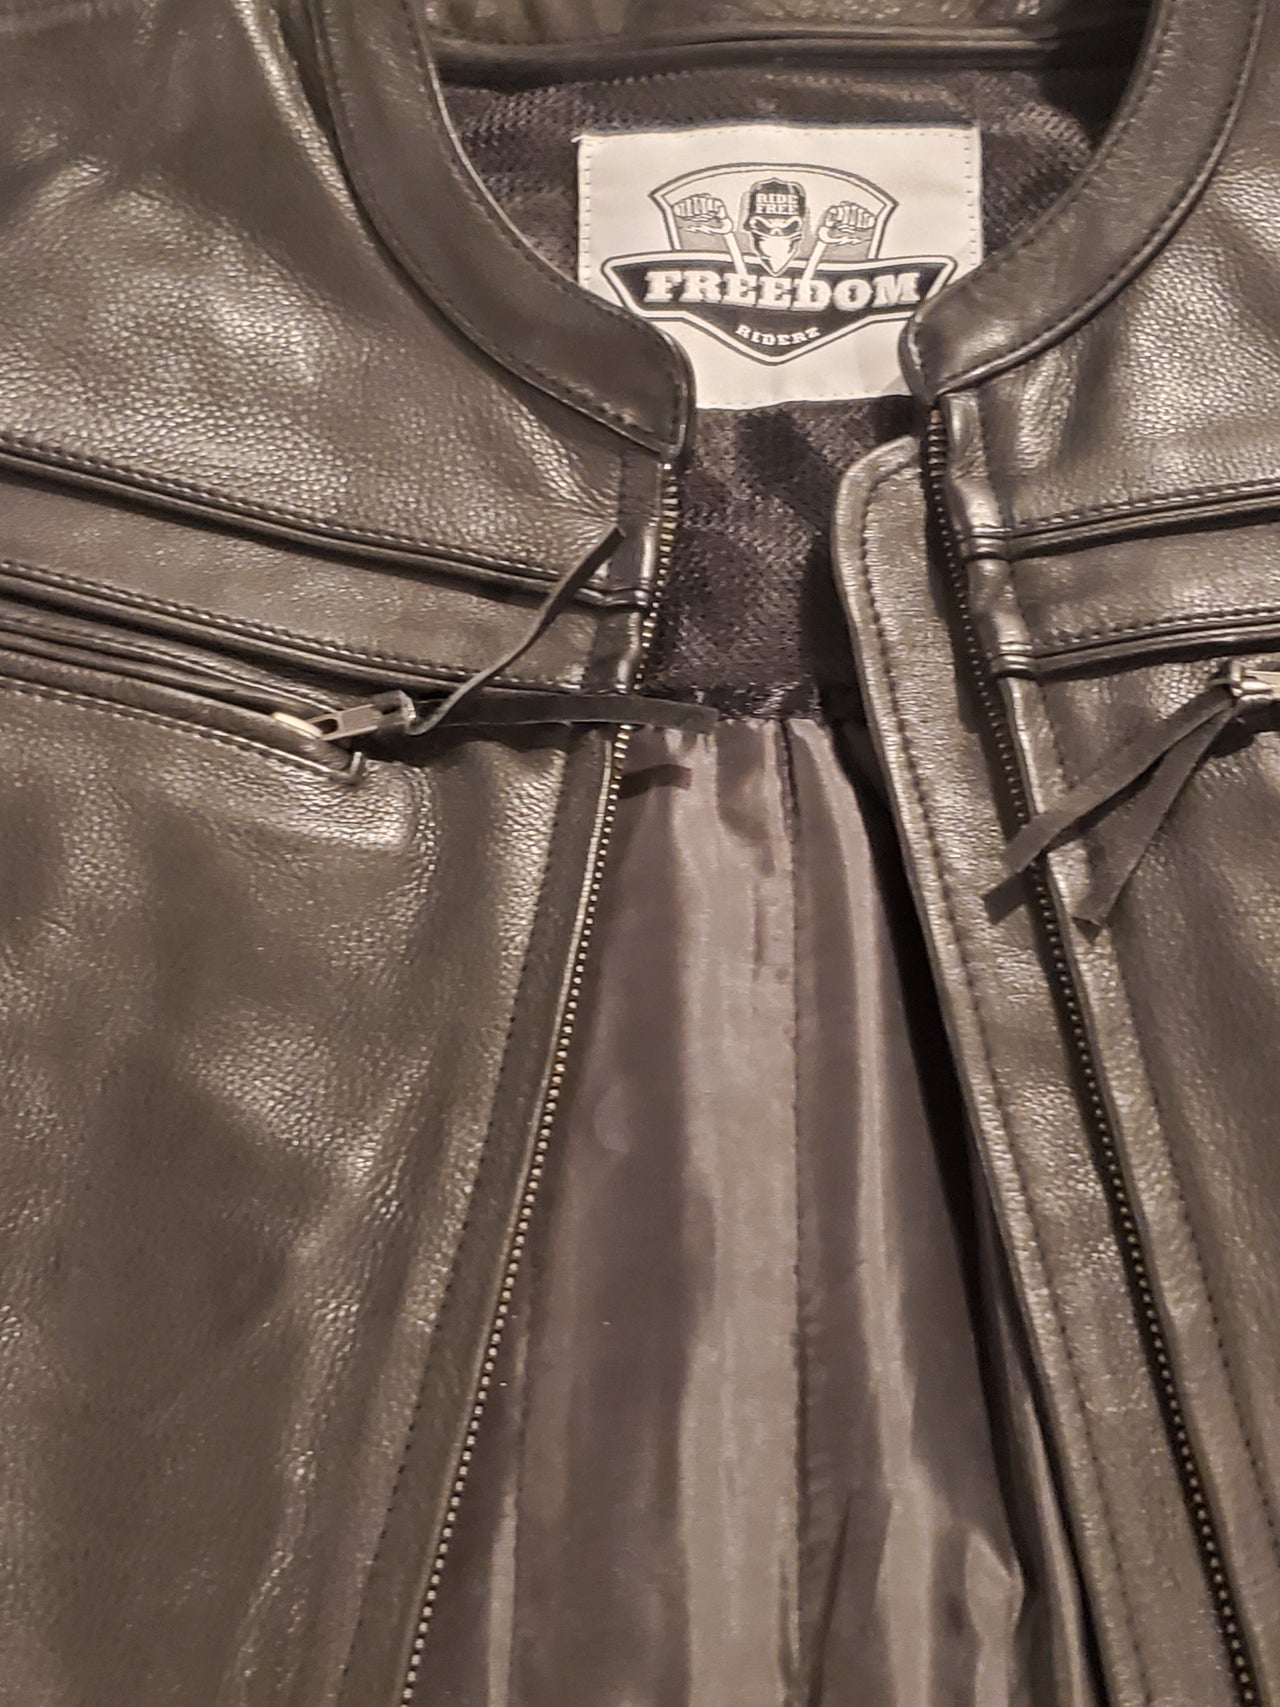 Maiden Women's Motorcycle Leather Jacket